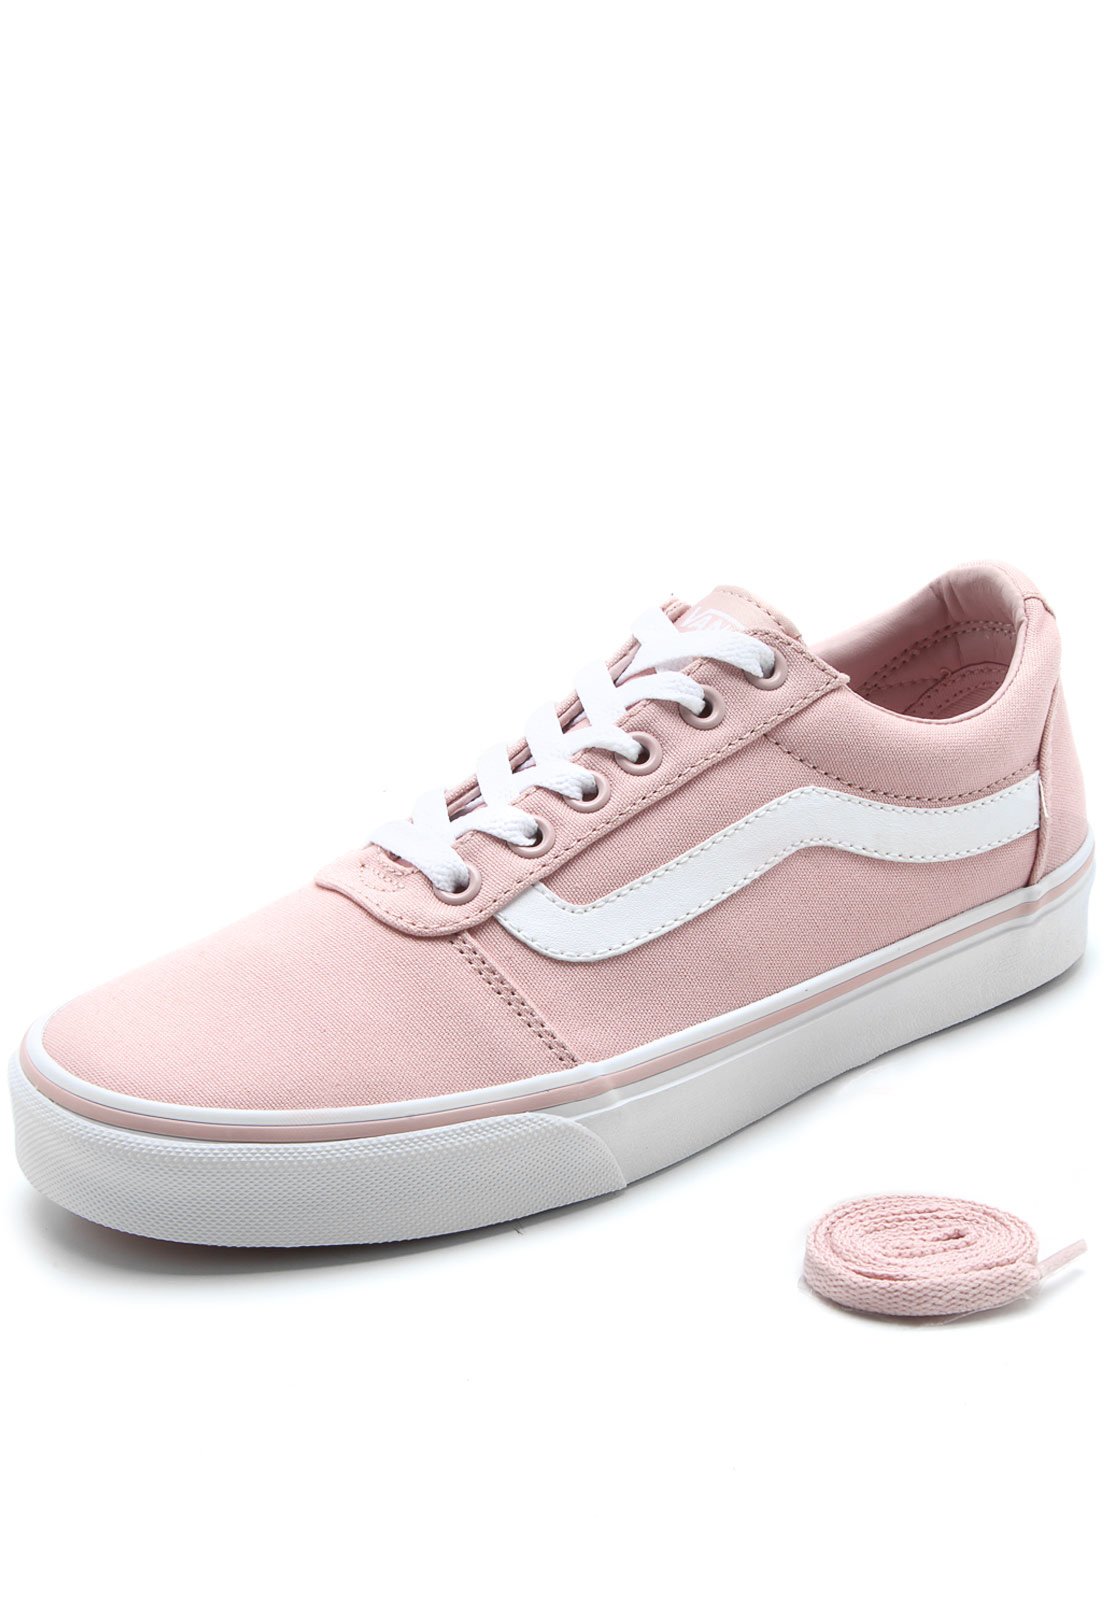 tenis da vans rosa e branco